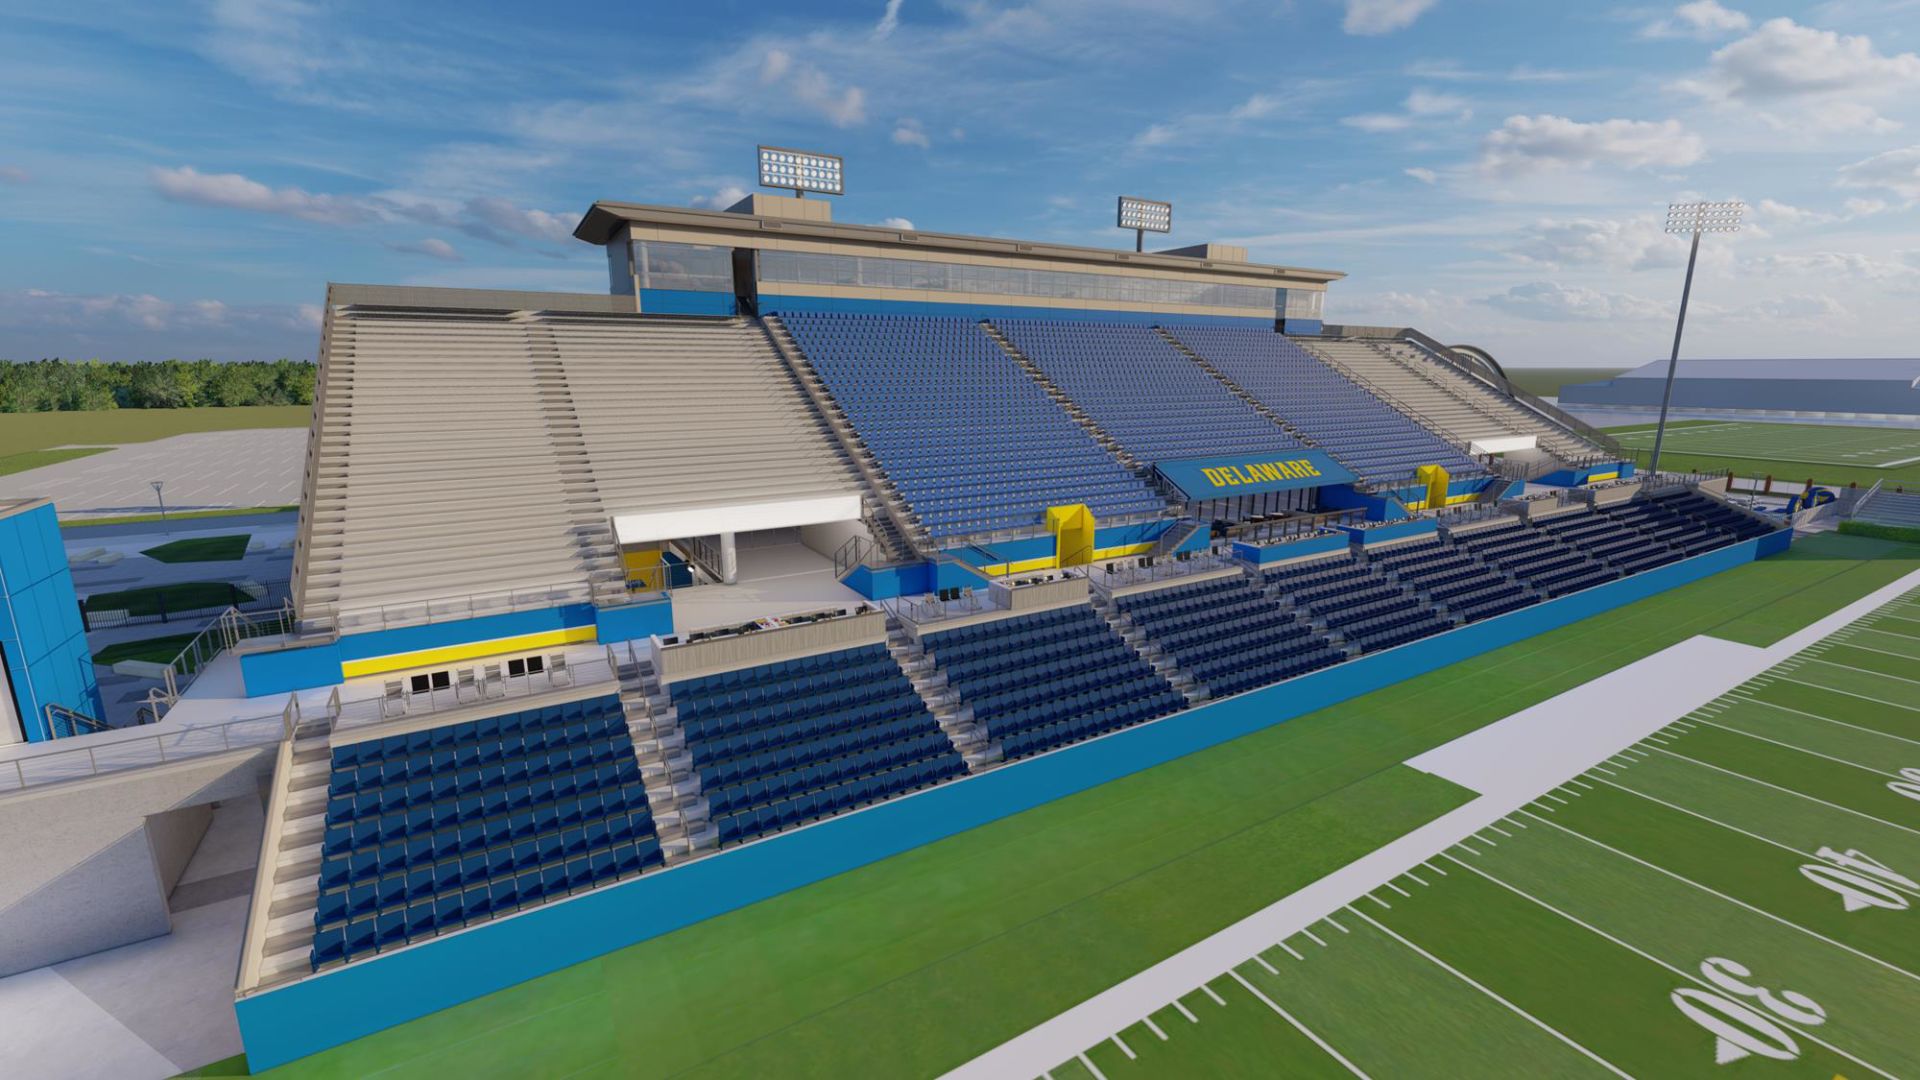 Delaware Football Stadium Seating Chart